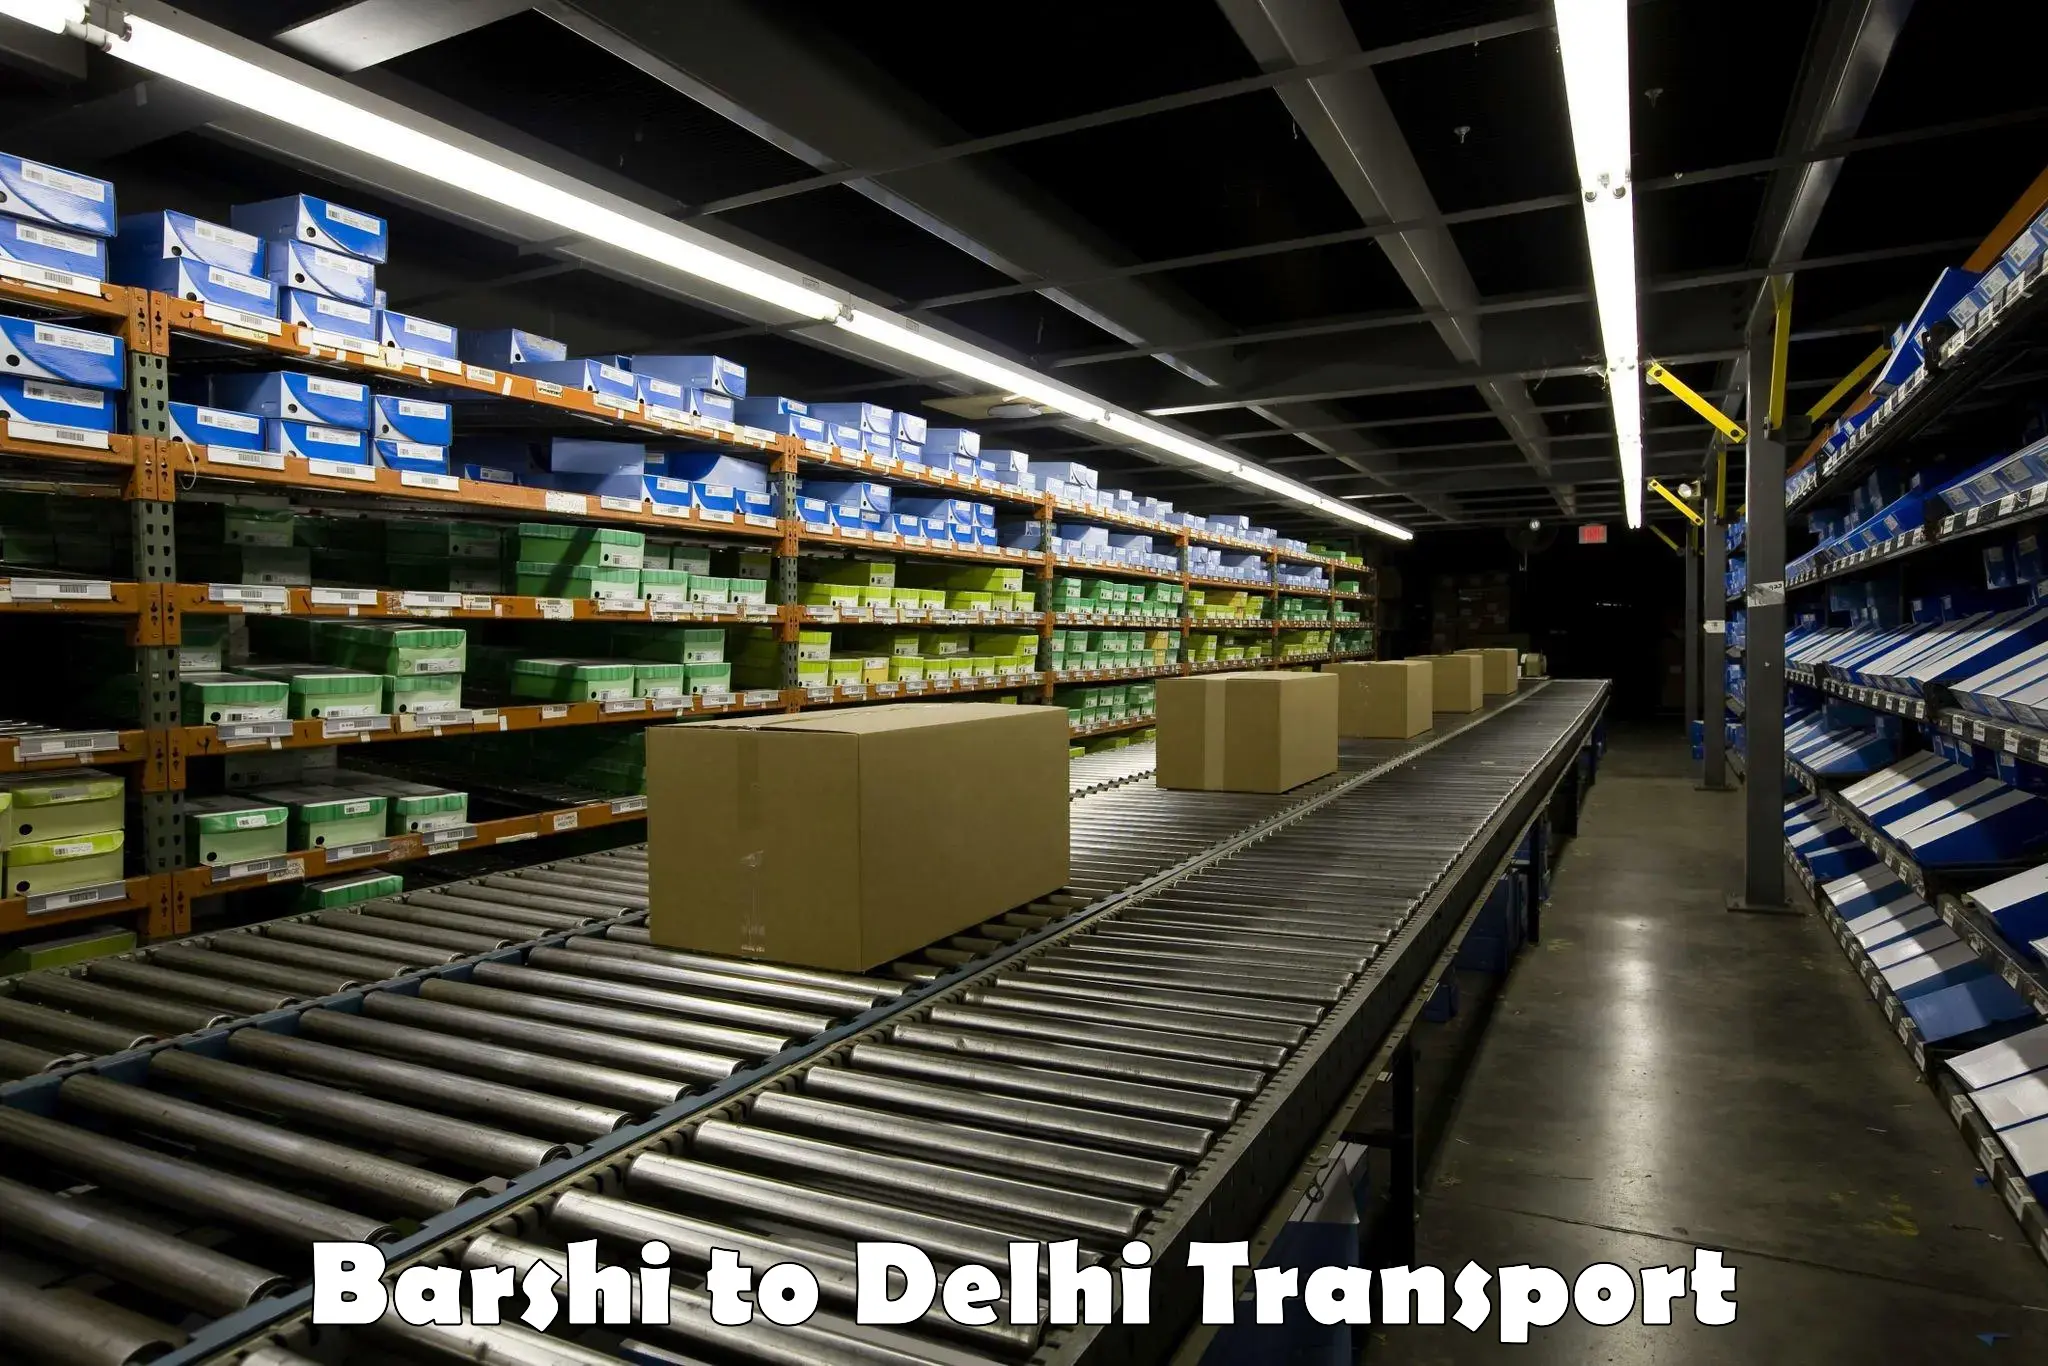 Truck transport companies in India Barshi to Burari